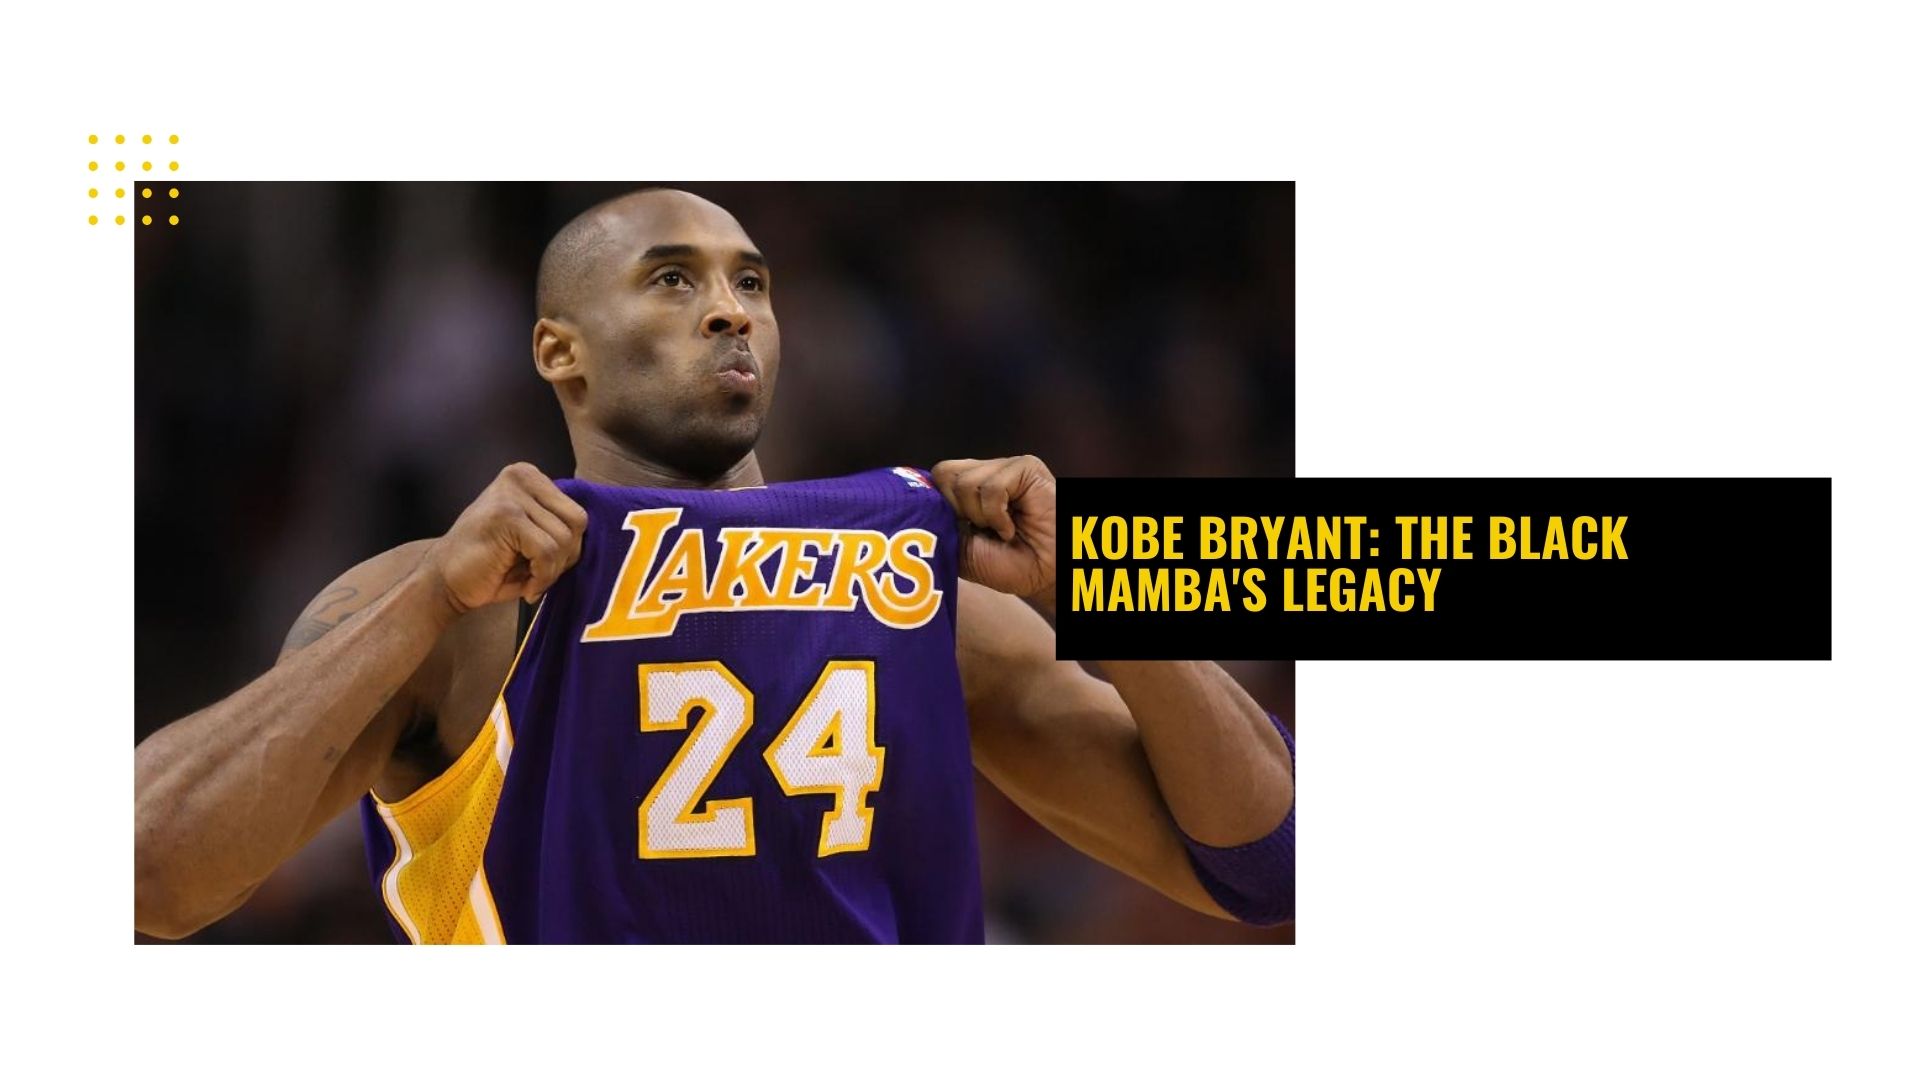 Kobe Bryant: The Black Mamba's Legacy